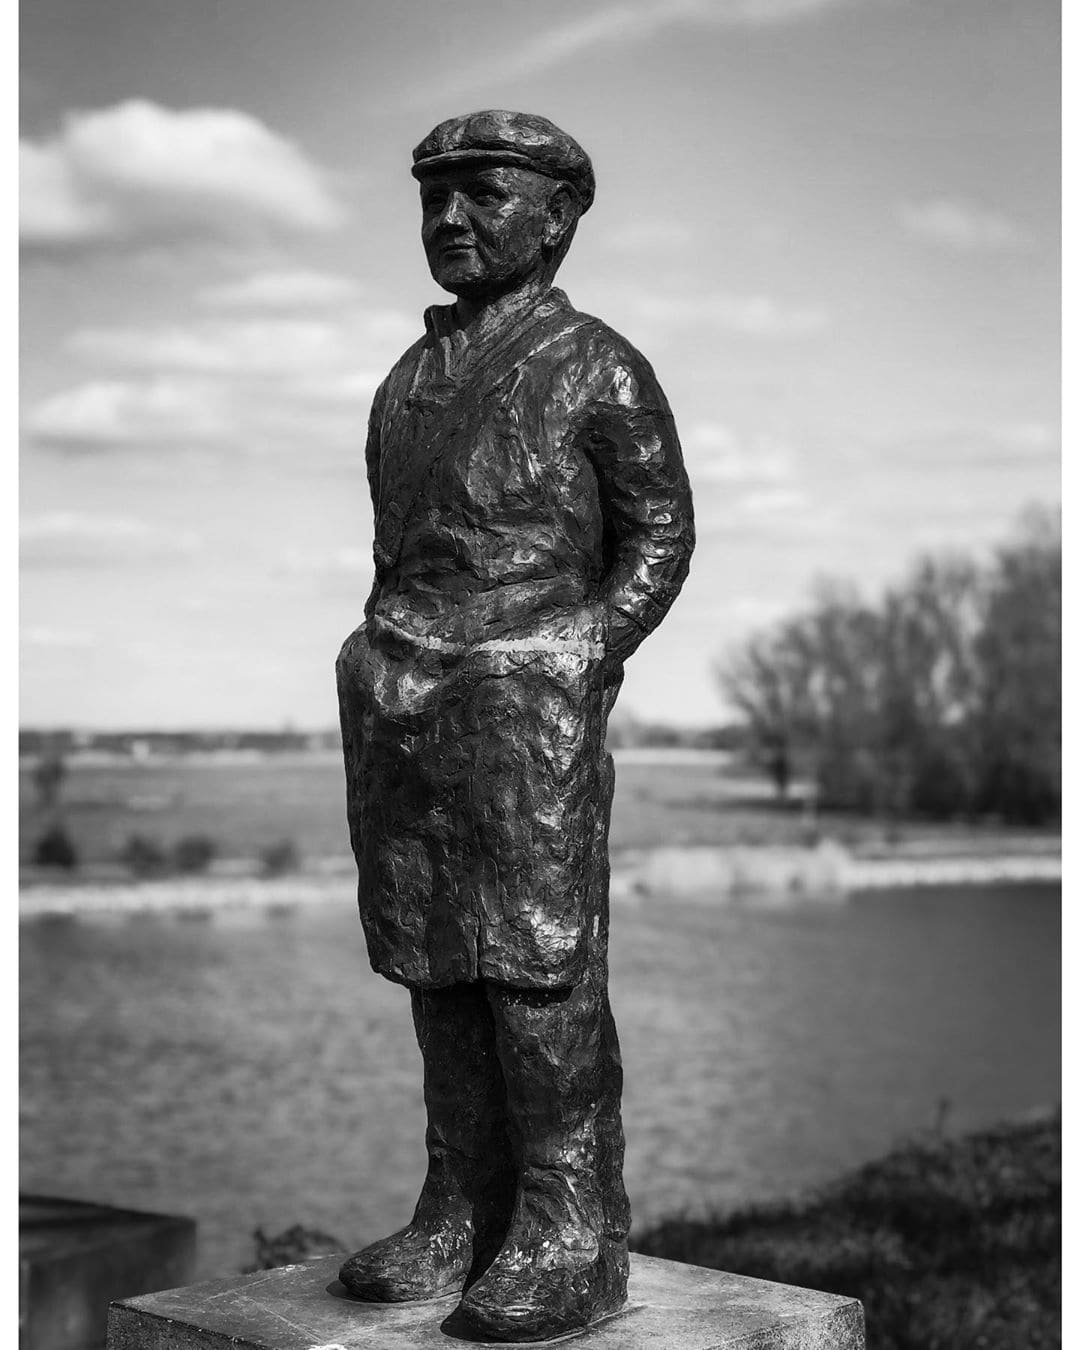 Statue at the river Maas